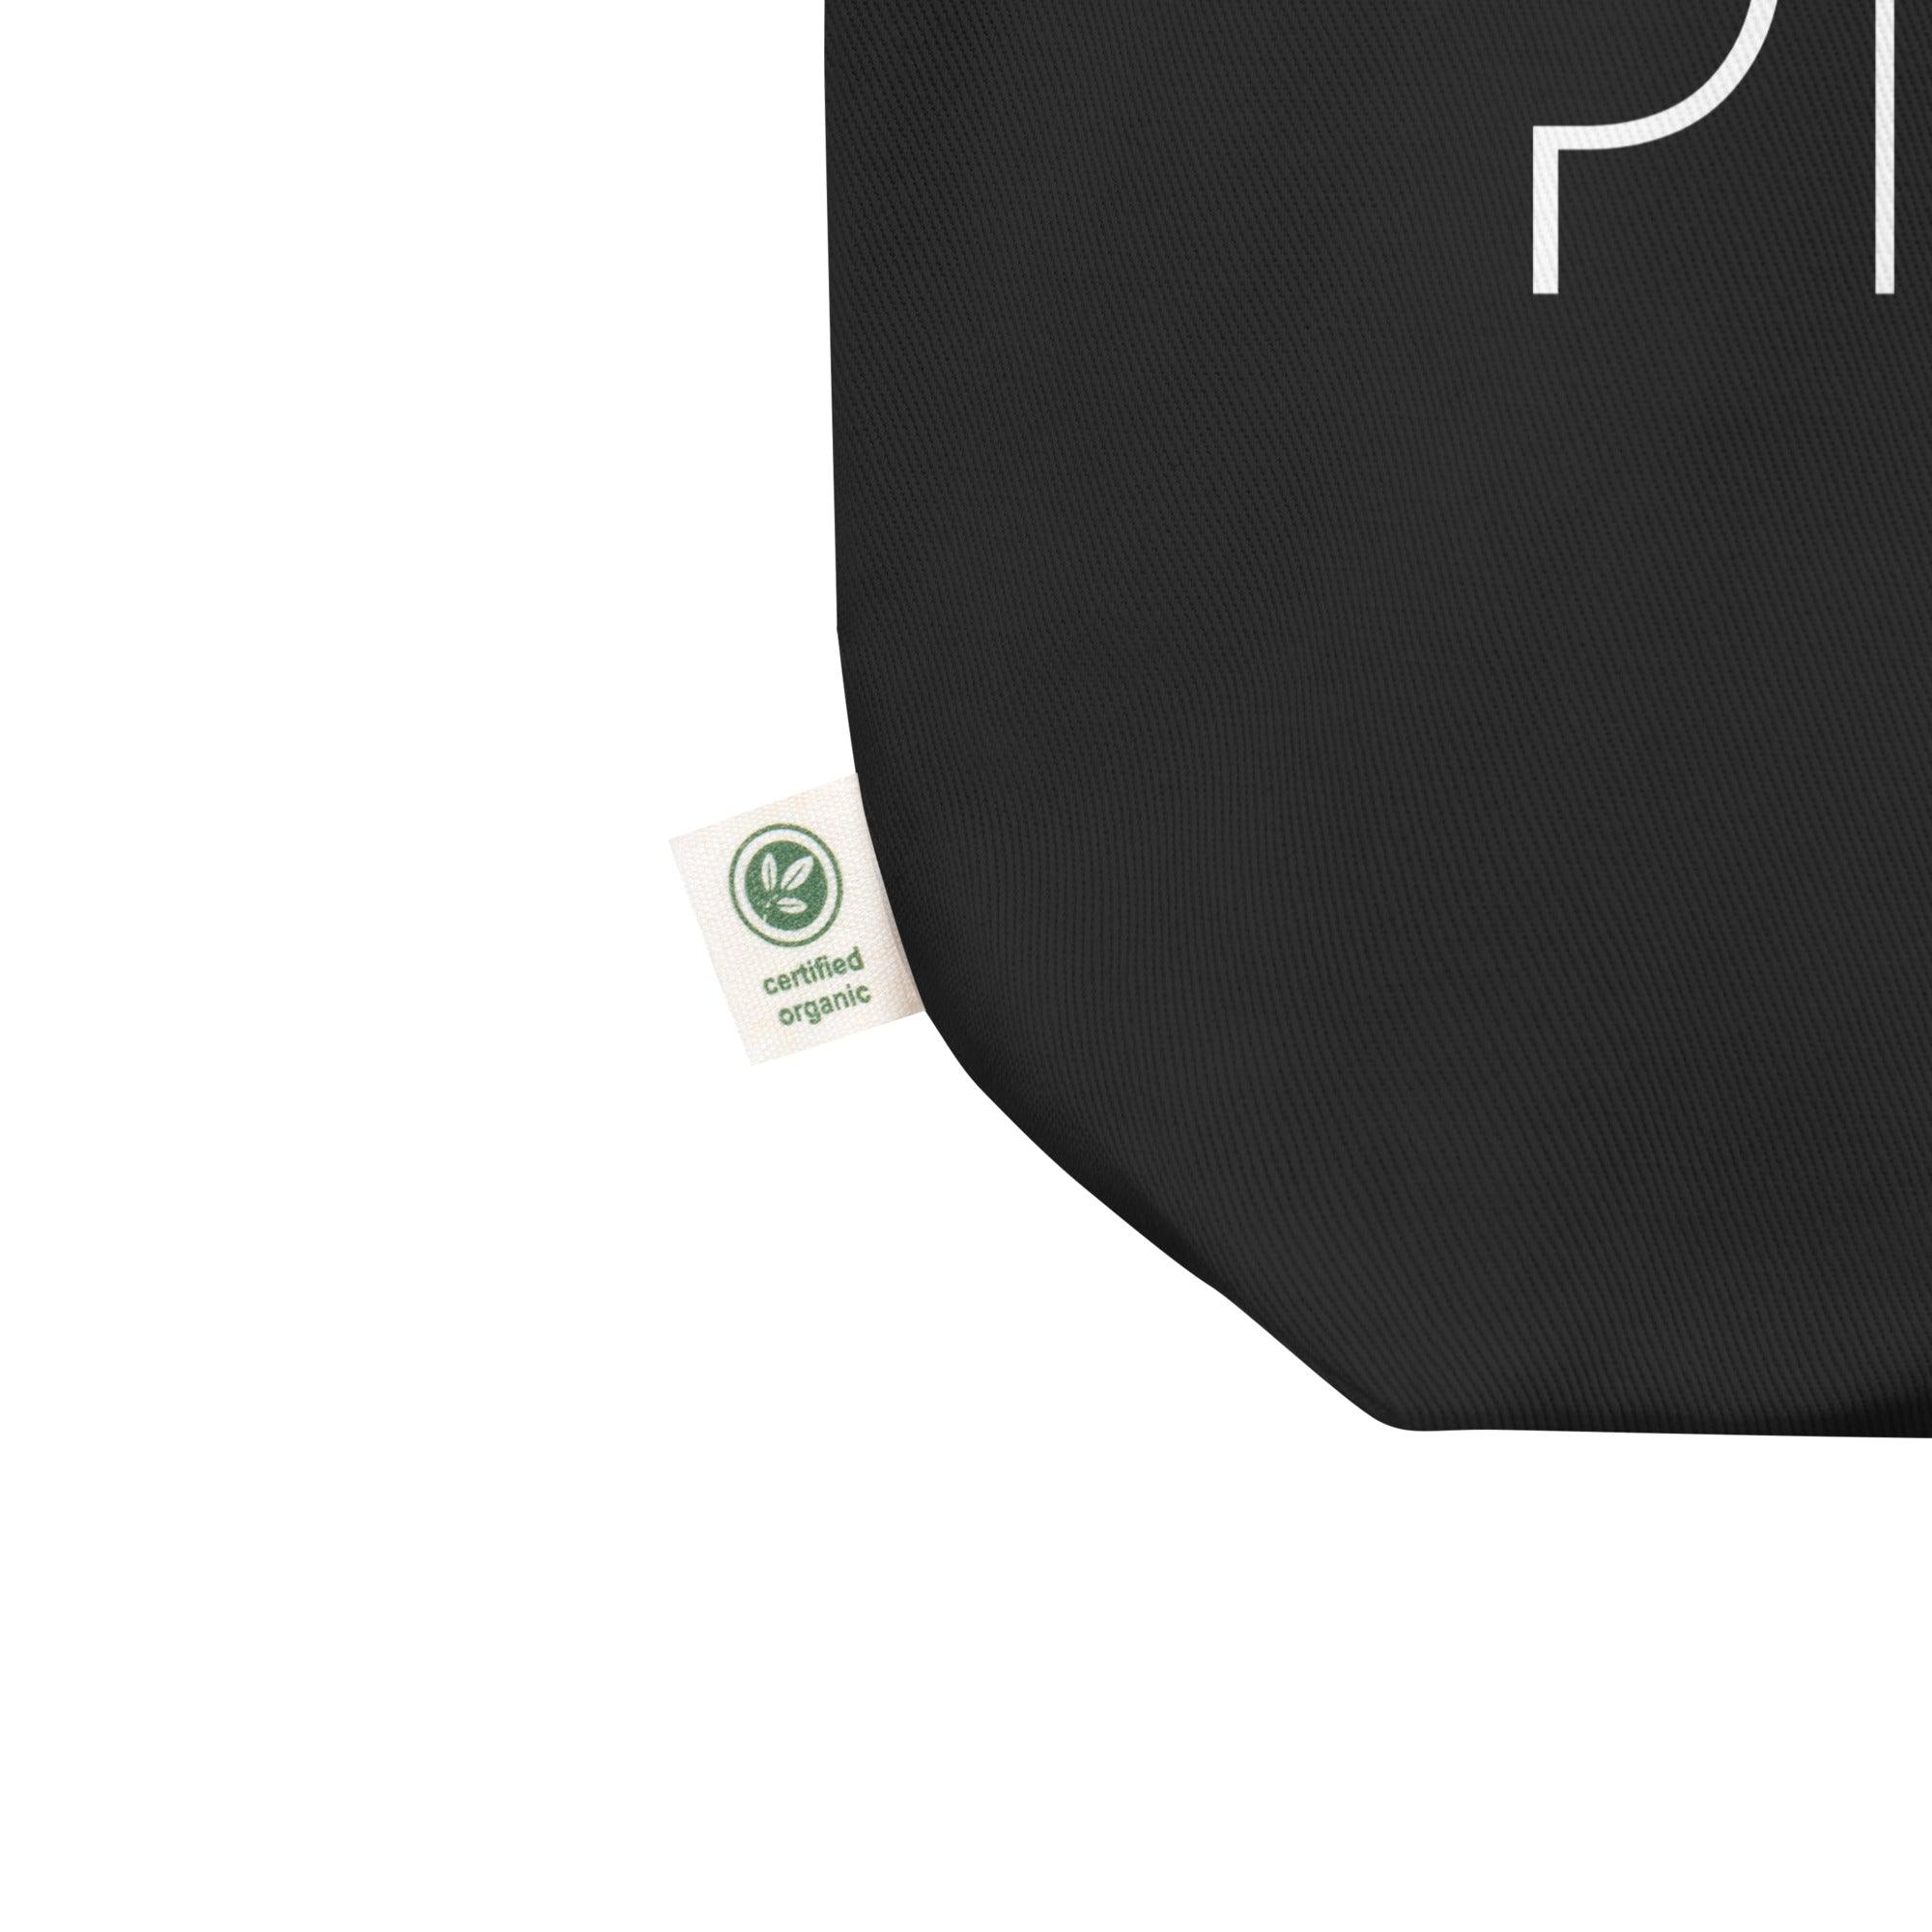 Logo Tote Bag | Shopping Totes | pitod.com